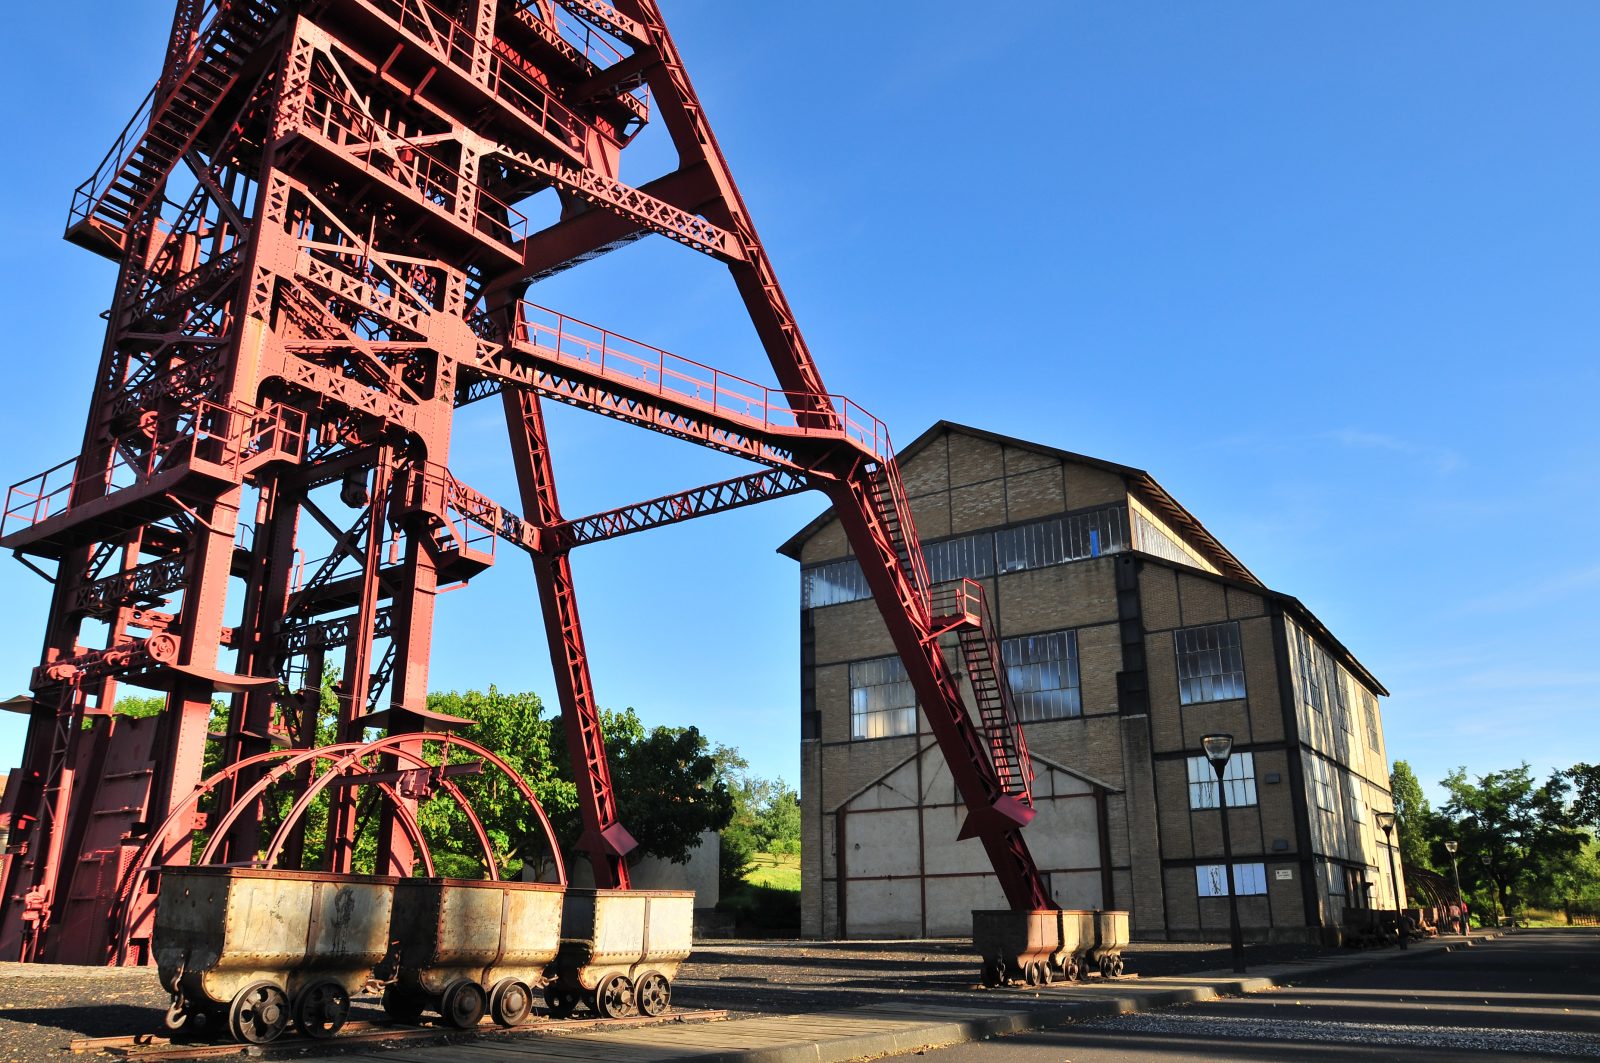 Musée de la mine, Brassac-les-mines